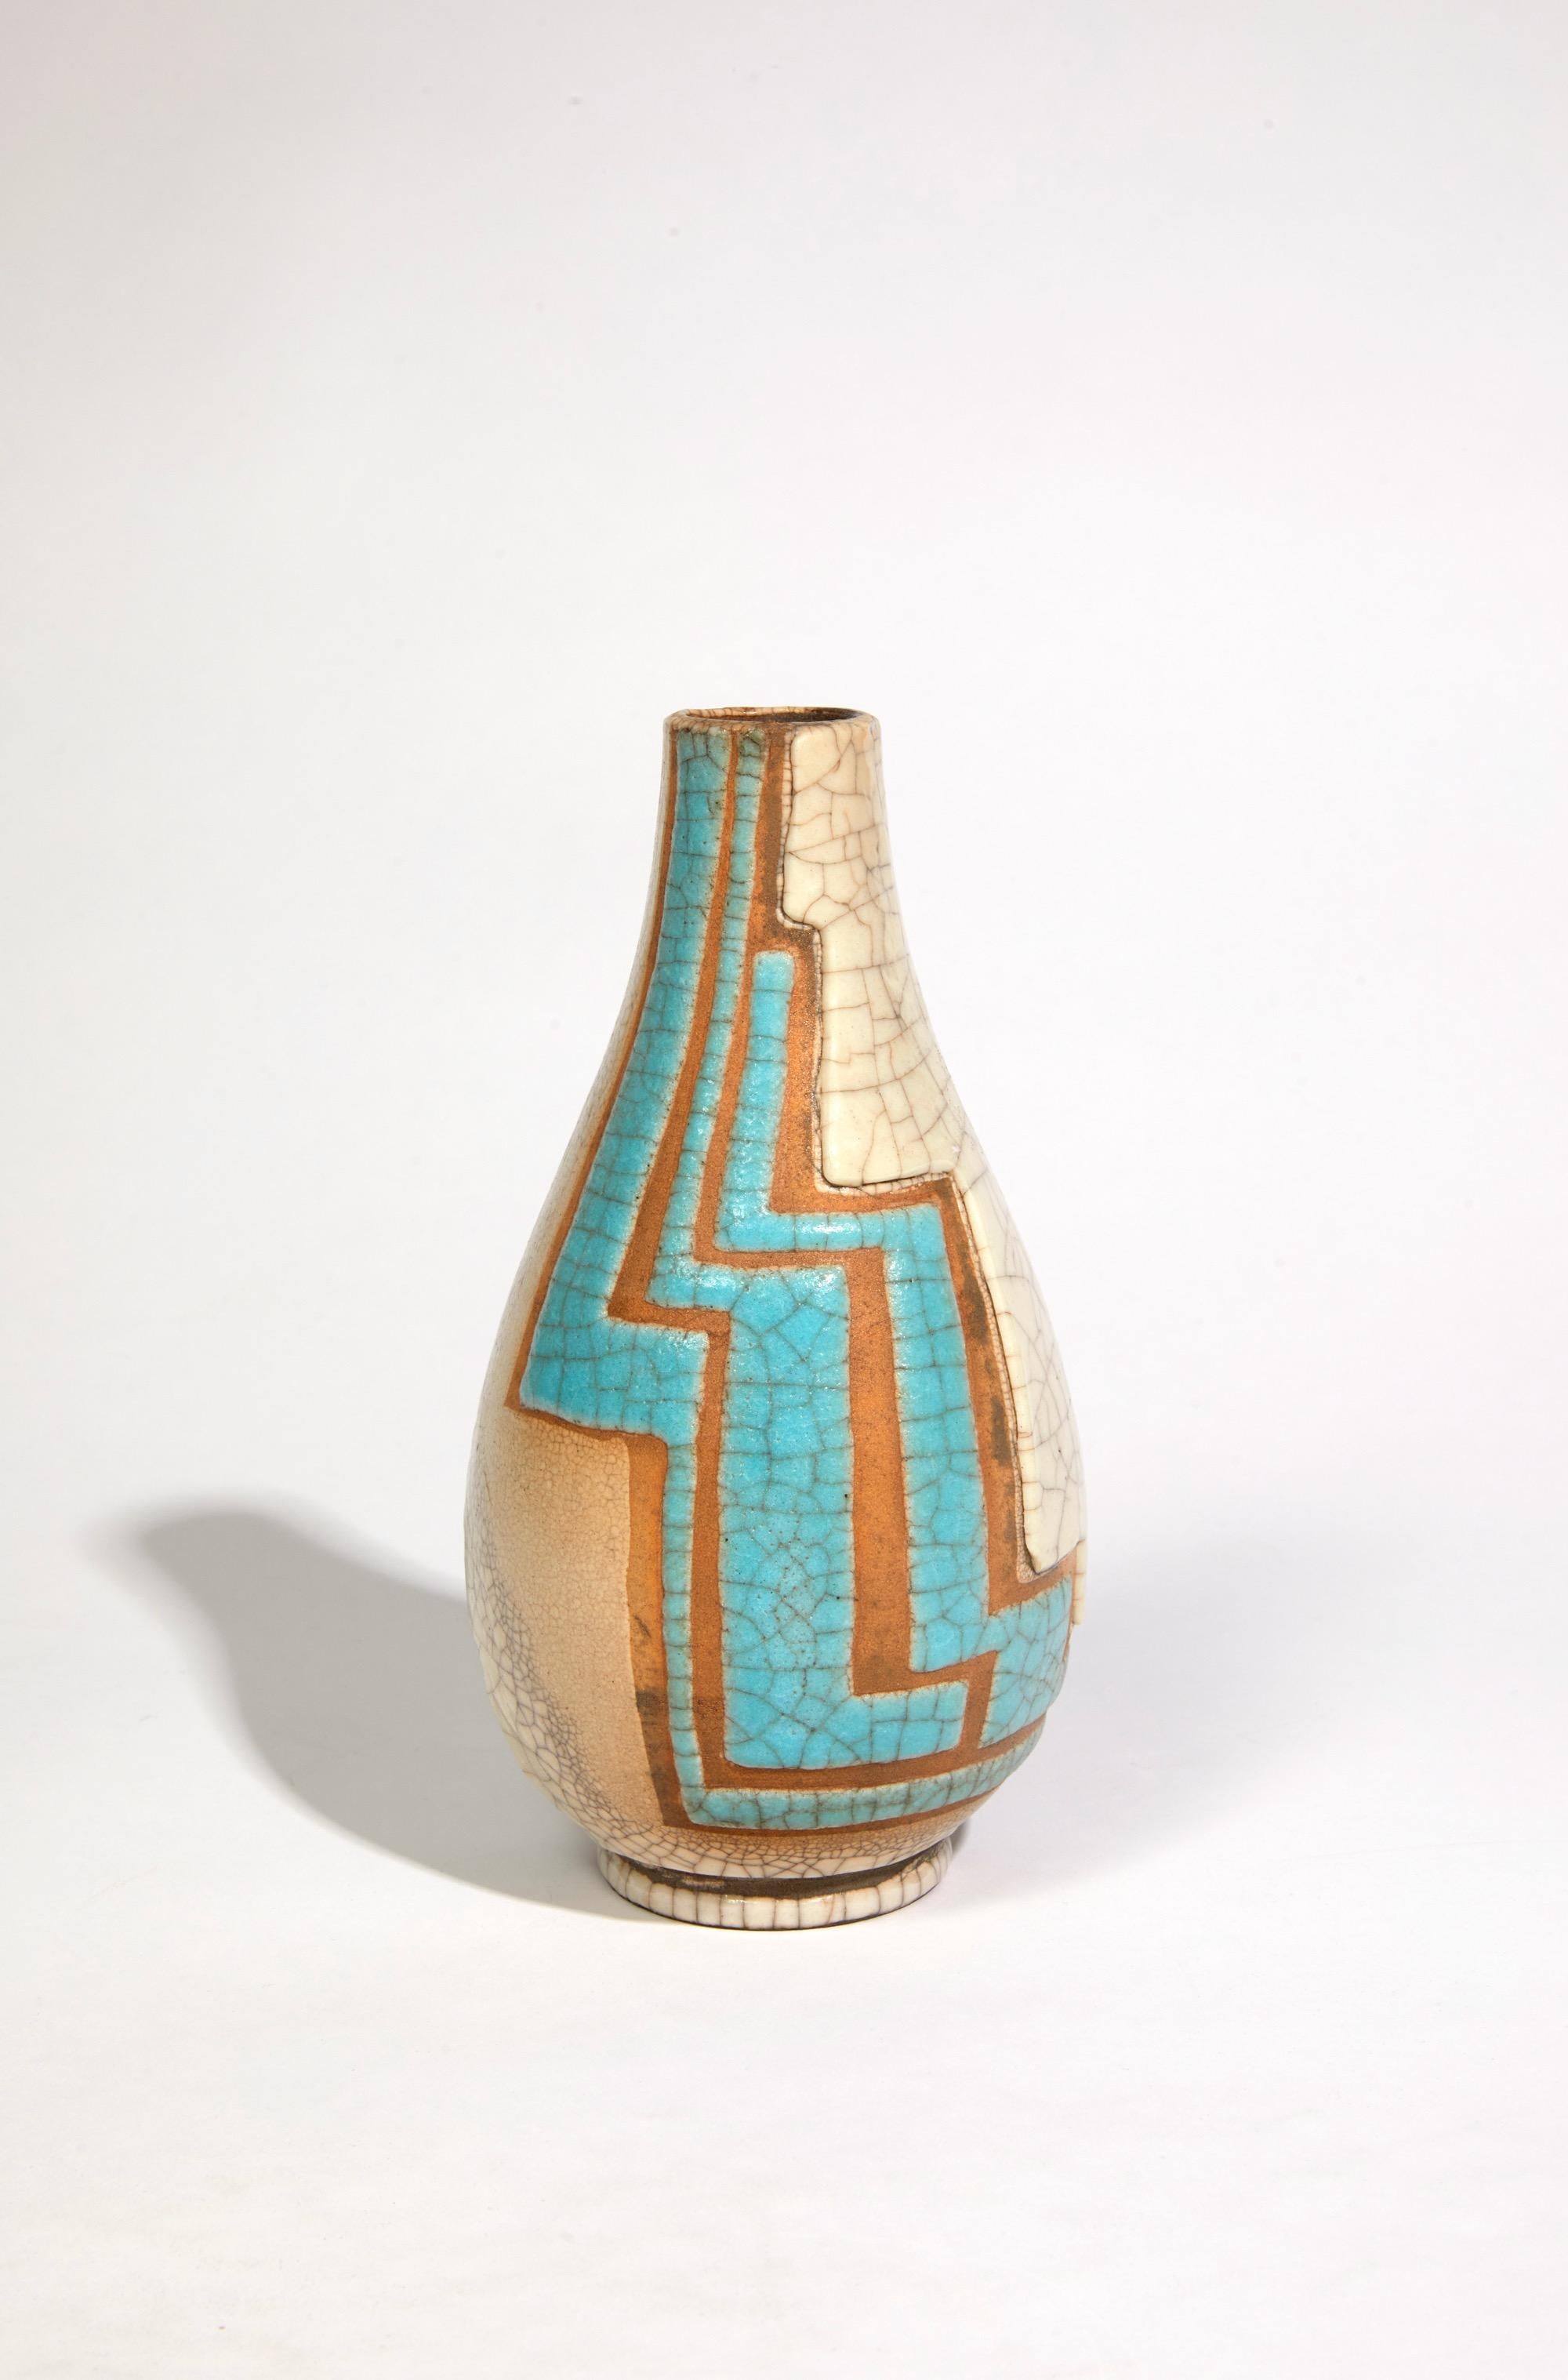 Piriform vase in glazed ceramic with geometric patterns, turquoise blue dots and ivory crackled decoration. Signed J. Doris.